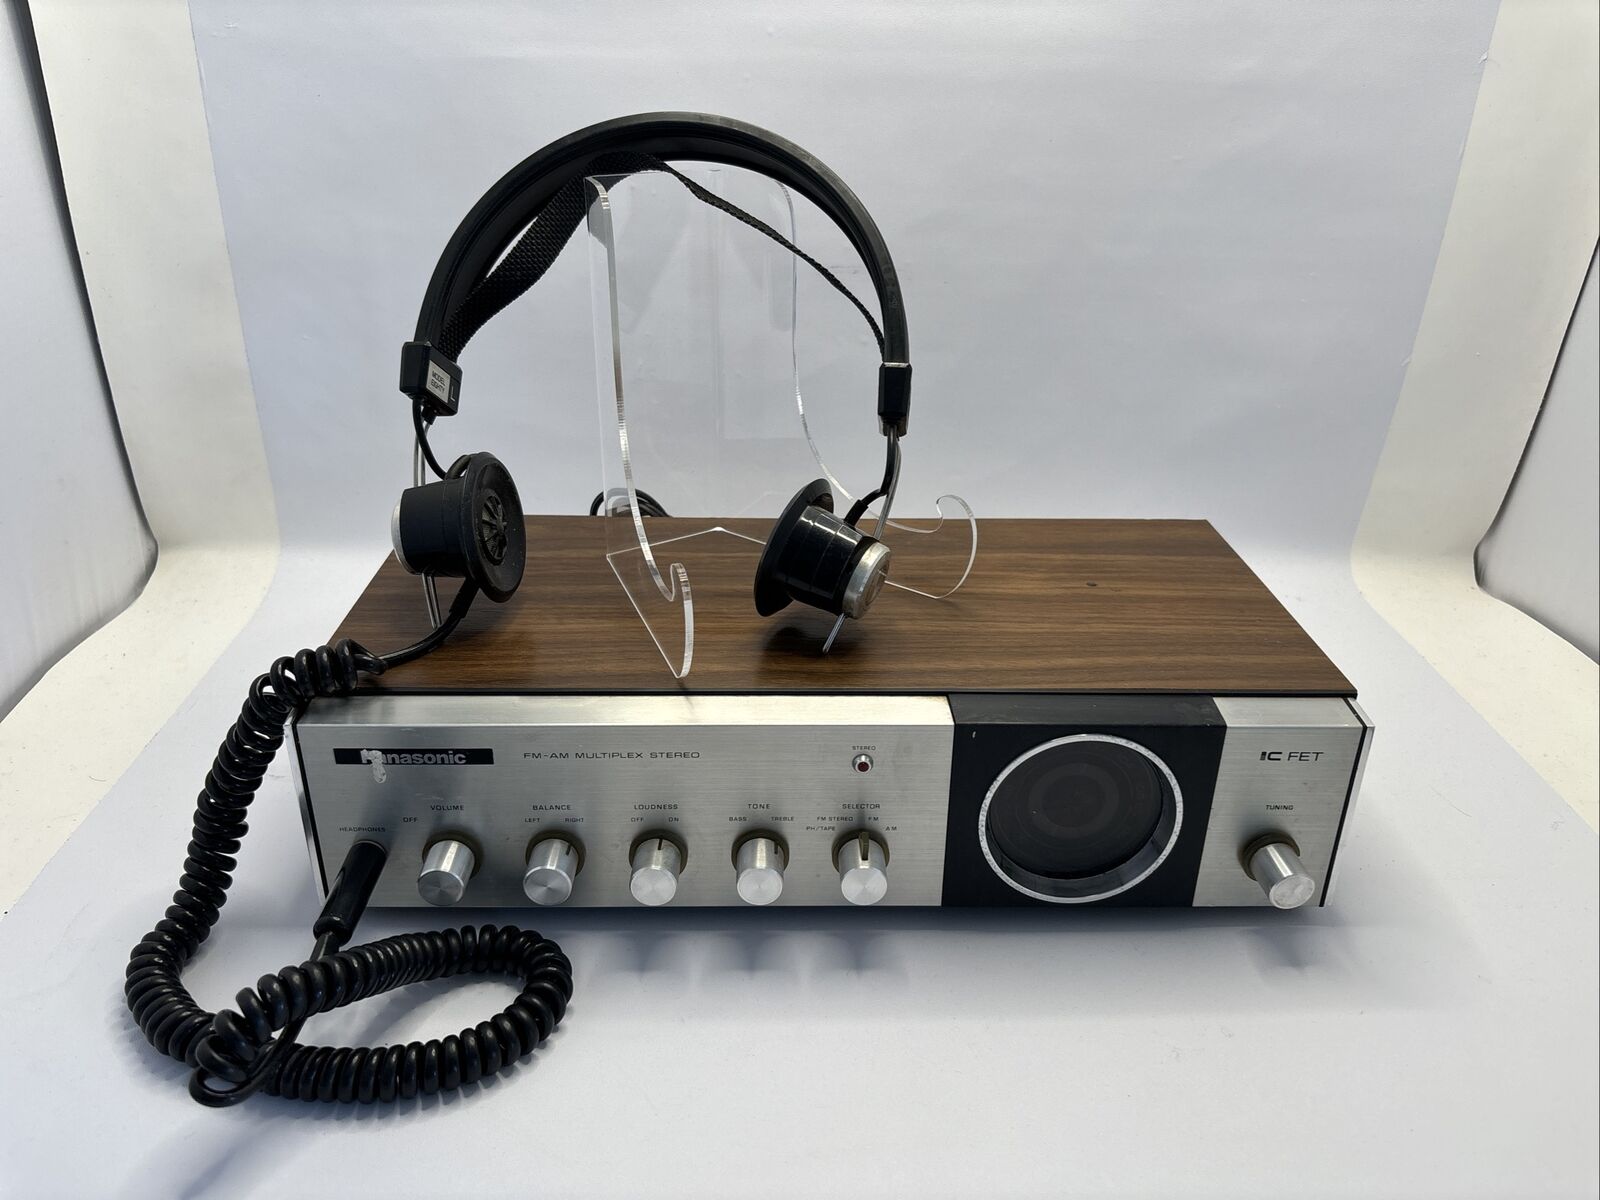 Vintage Panasonic RE-7412 IC FET FM-AM Multiplex Stereo w/ KLH Headphones - Work